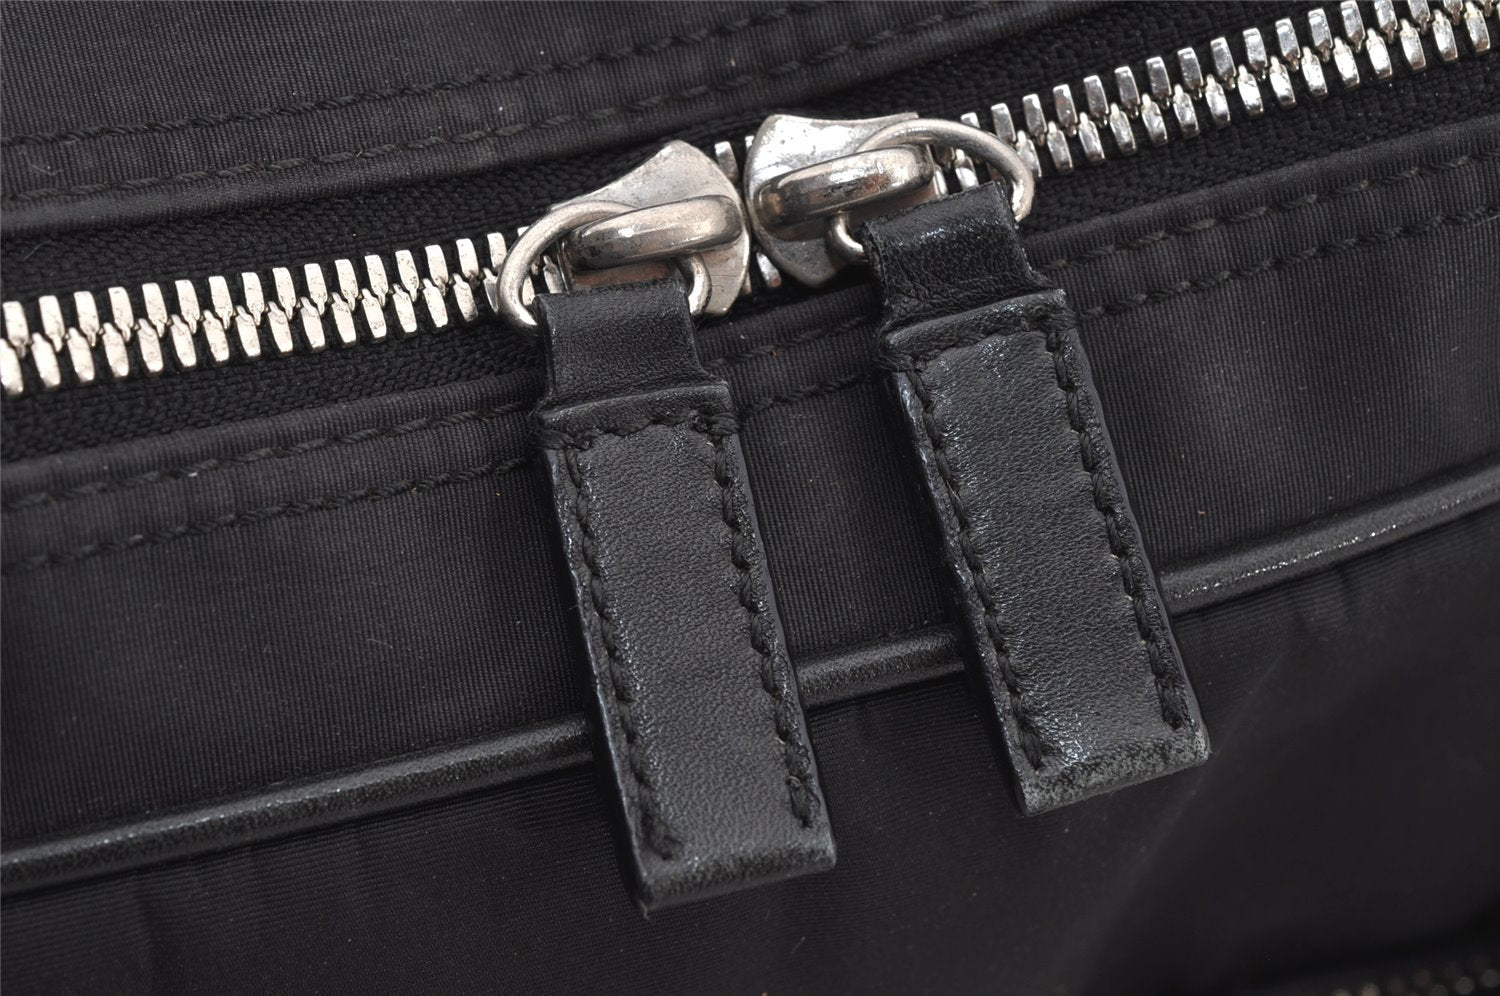 Authentic COACH Signature 2Way Briefcase Business Bag Nylon Leather Black 8374J